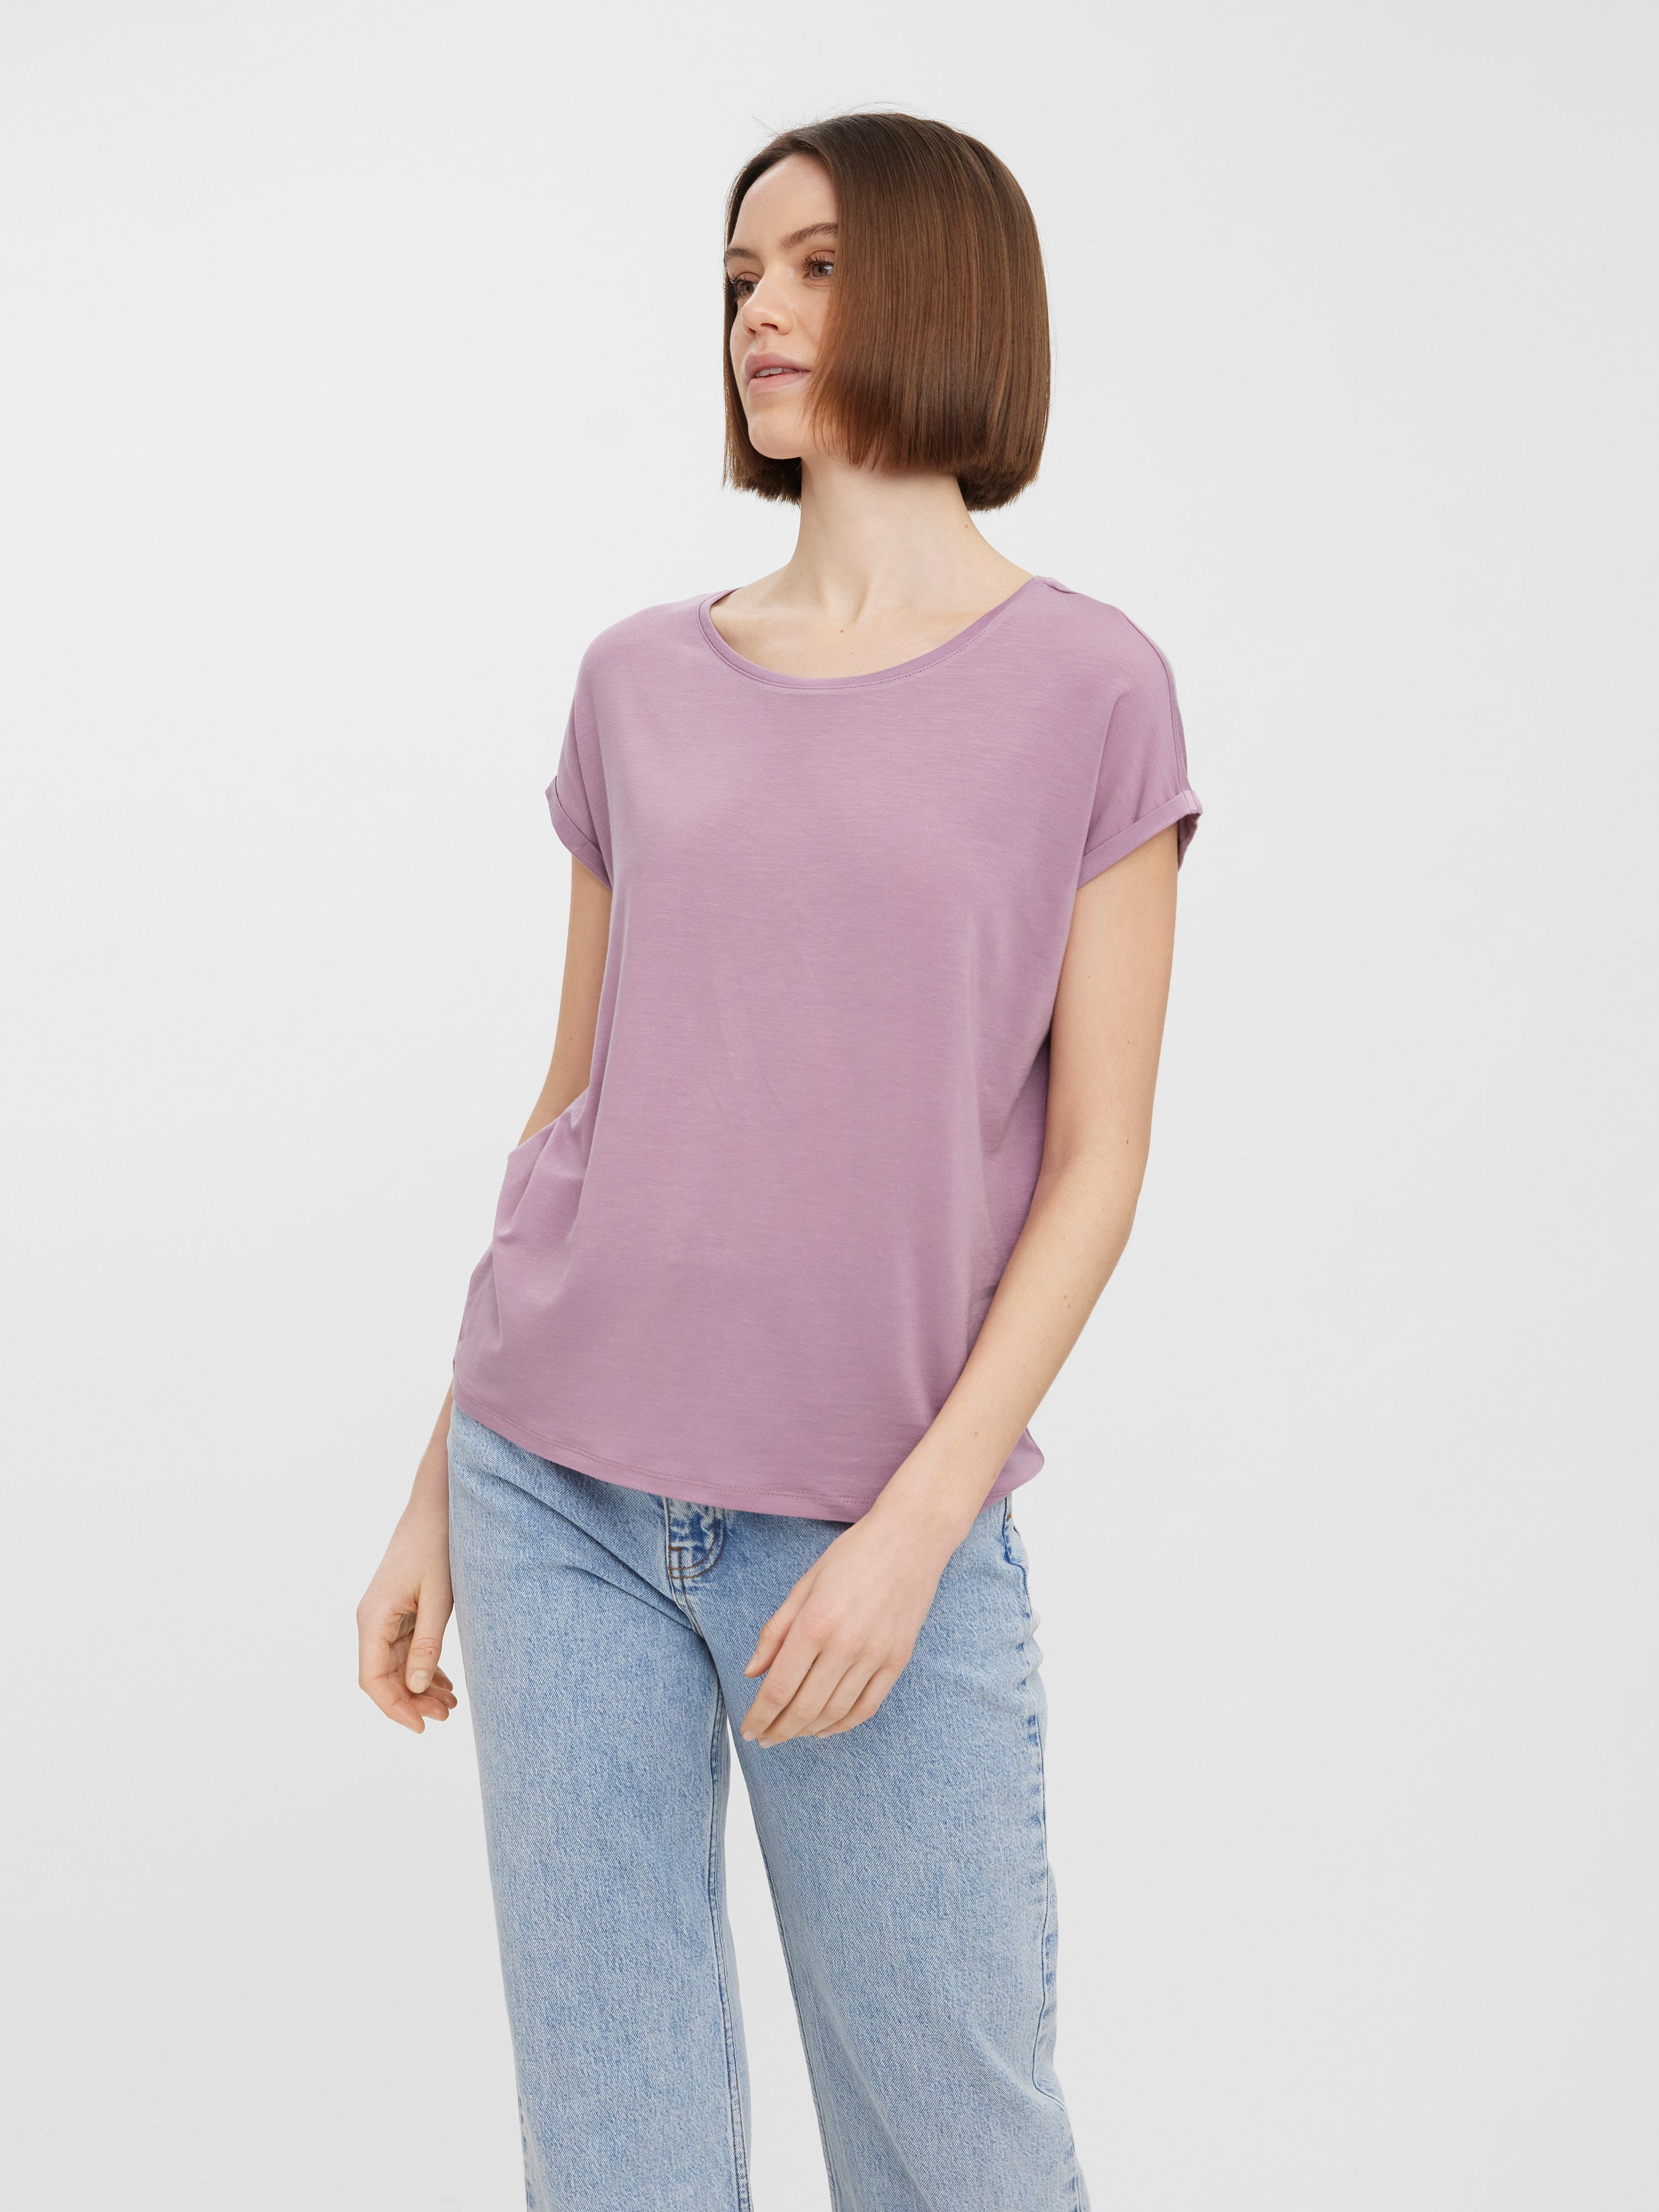 Rabatt 76 % Vero Moda T-Shirt DAMEN Hemden & T-Shirts Casual Grau S 